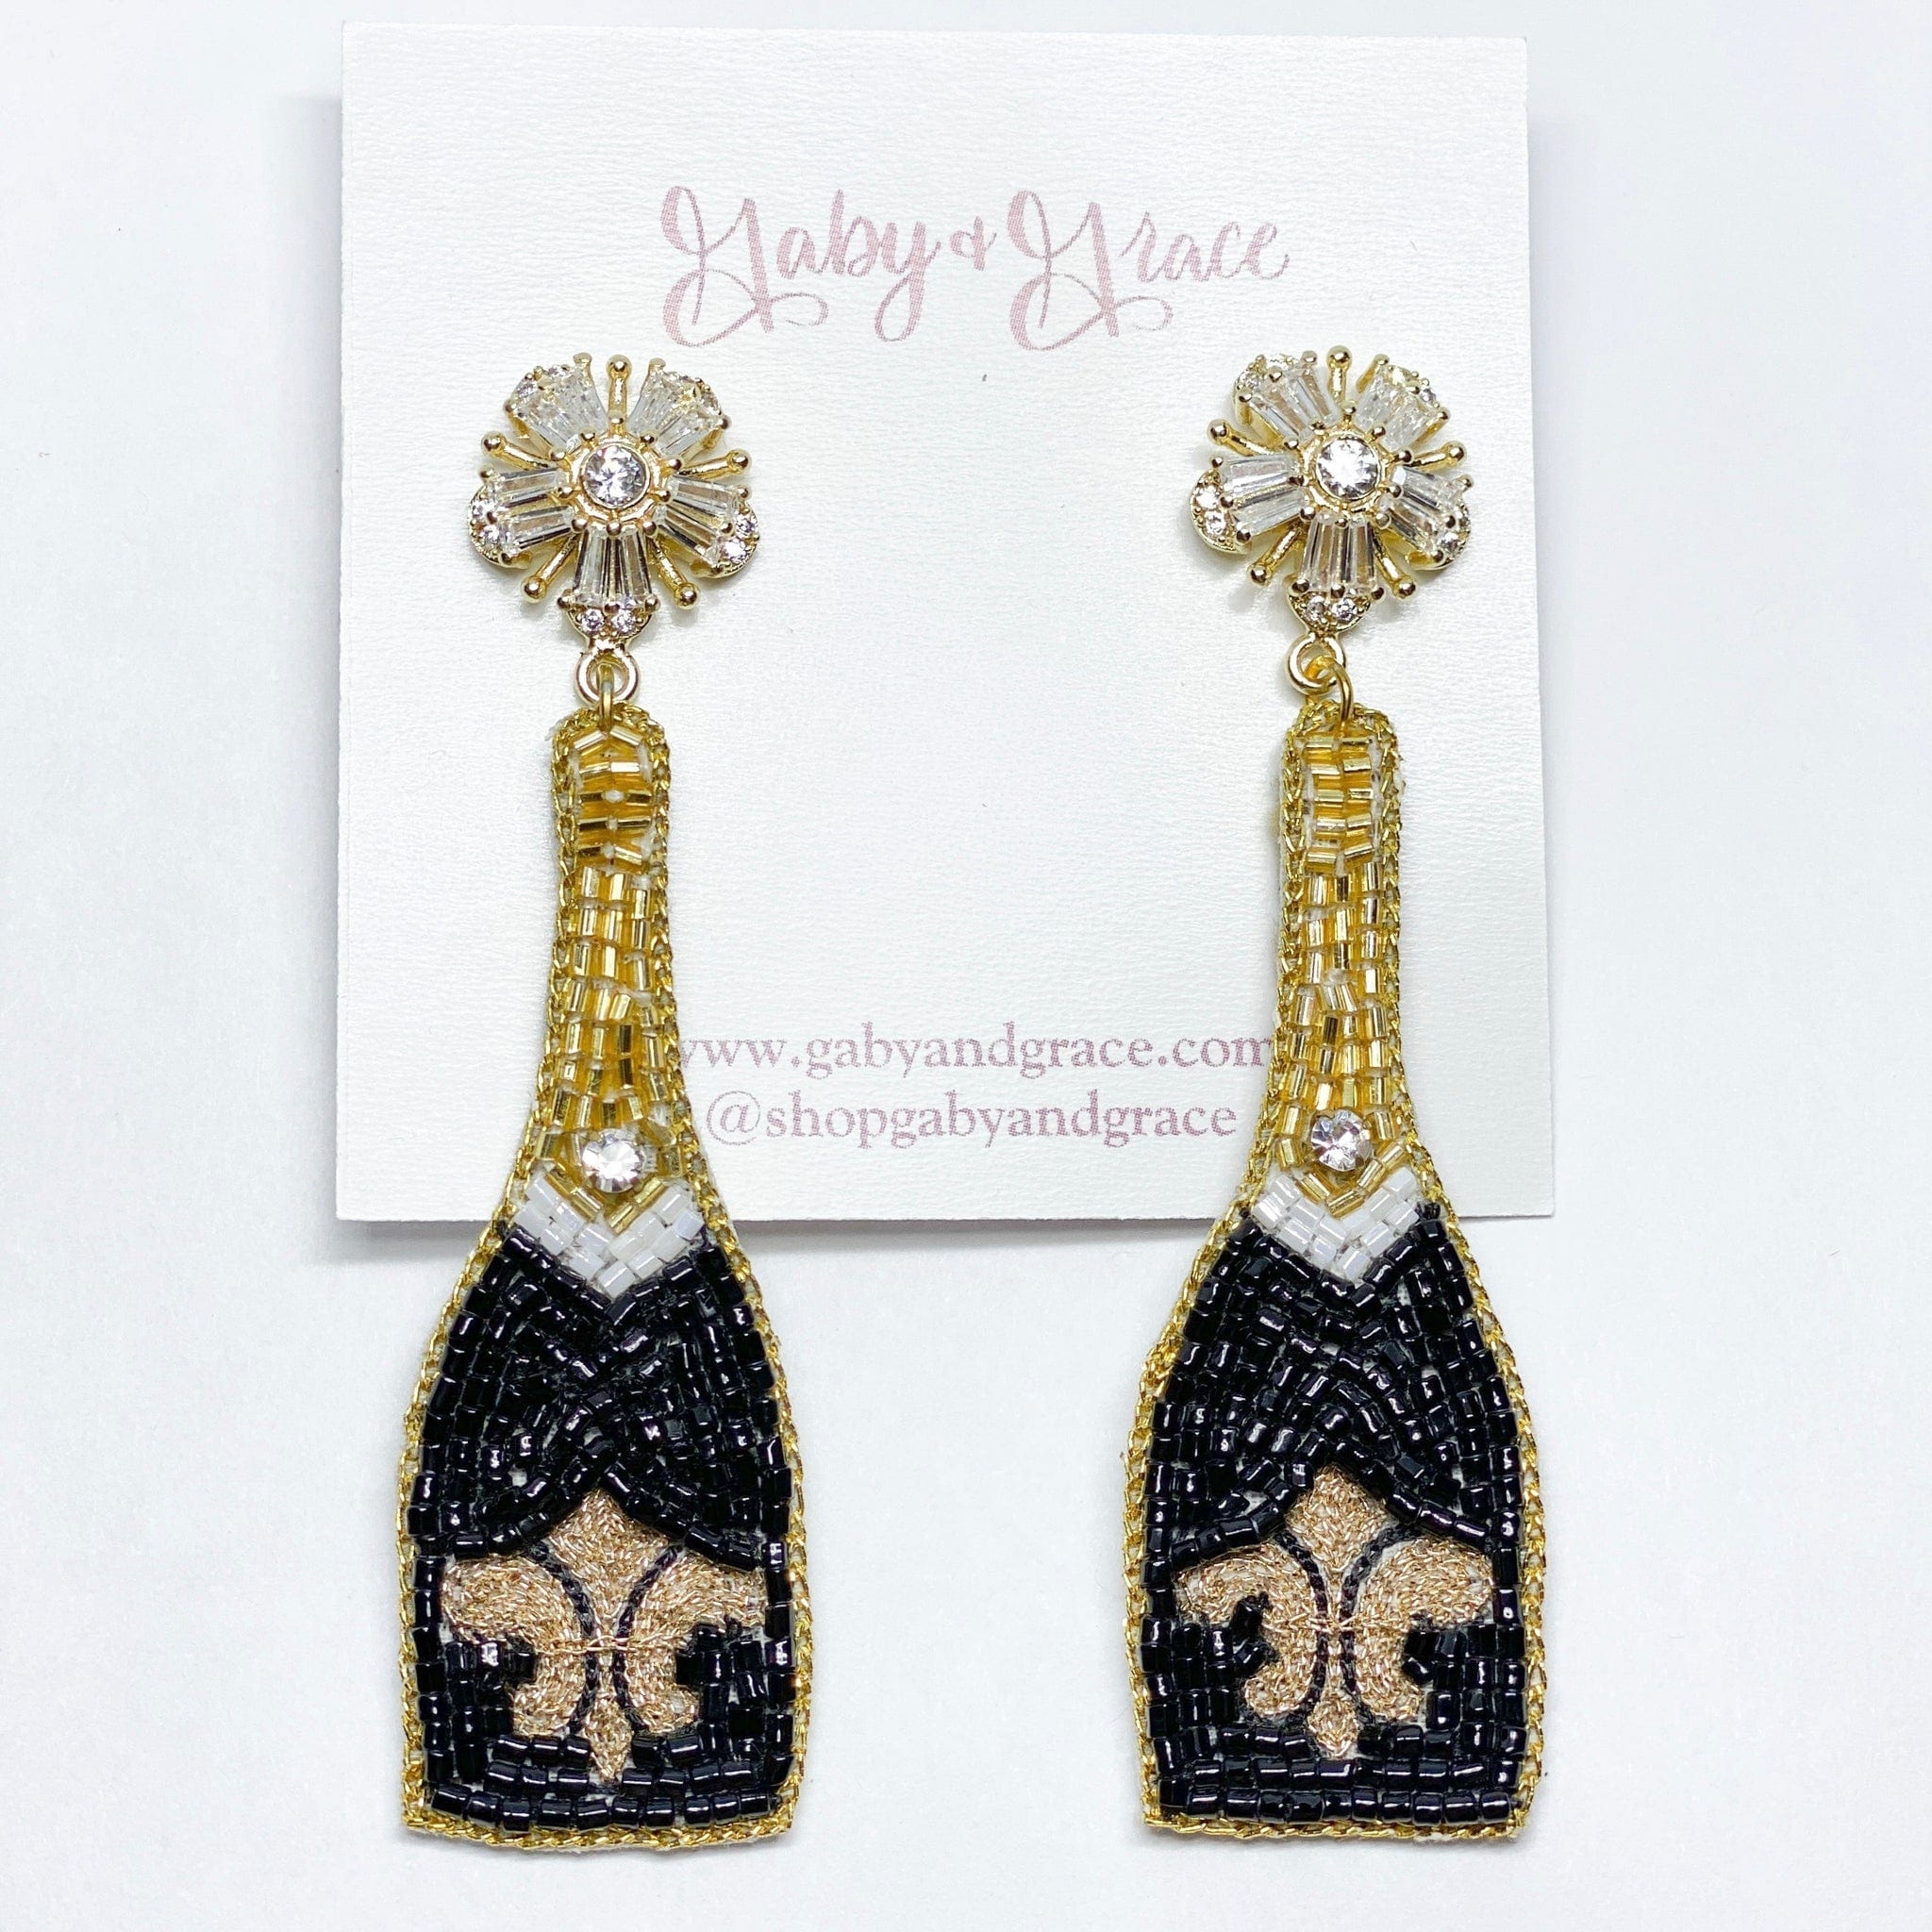 GBG - Gaby & Grace Gaby & Grace Fleur Di Lis Champagne Bottle Earrings - Little Miss Muffin Children & Home